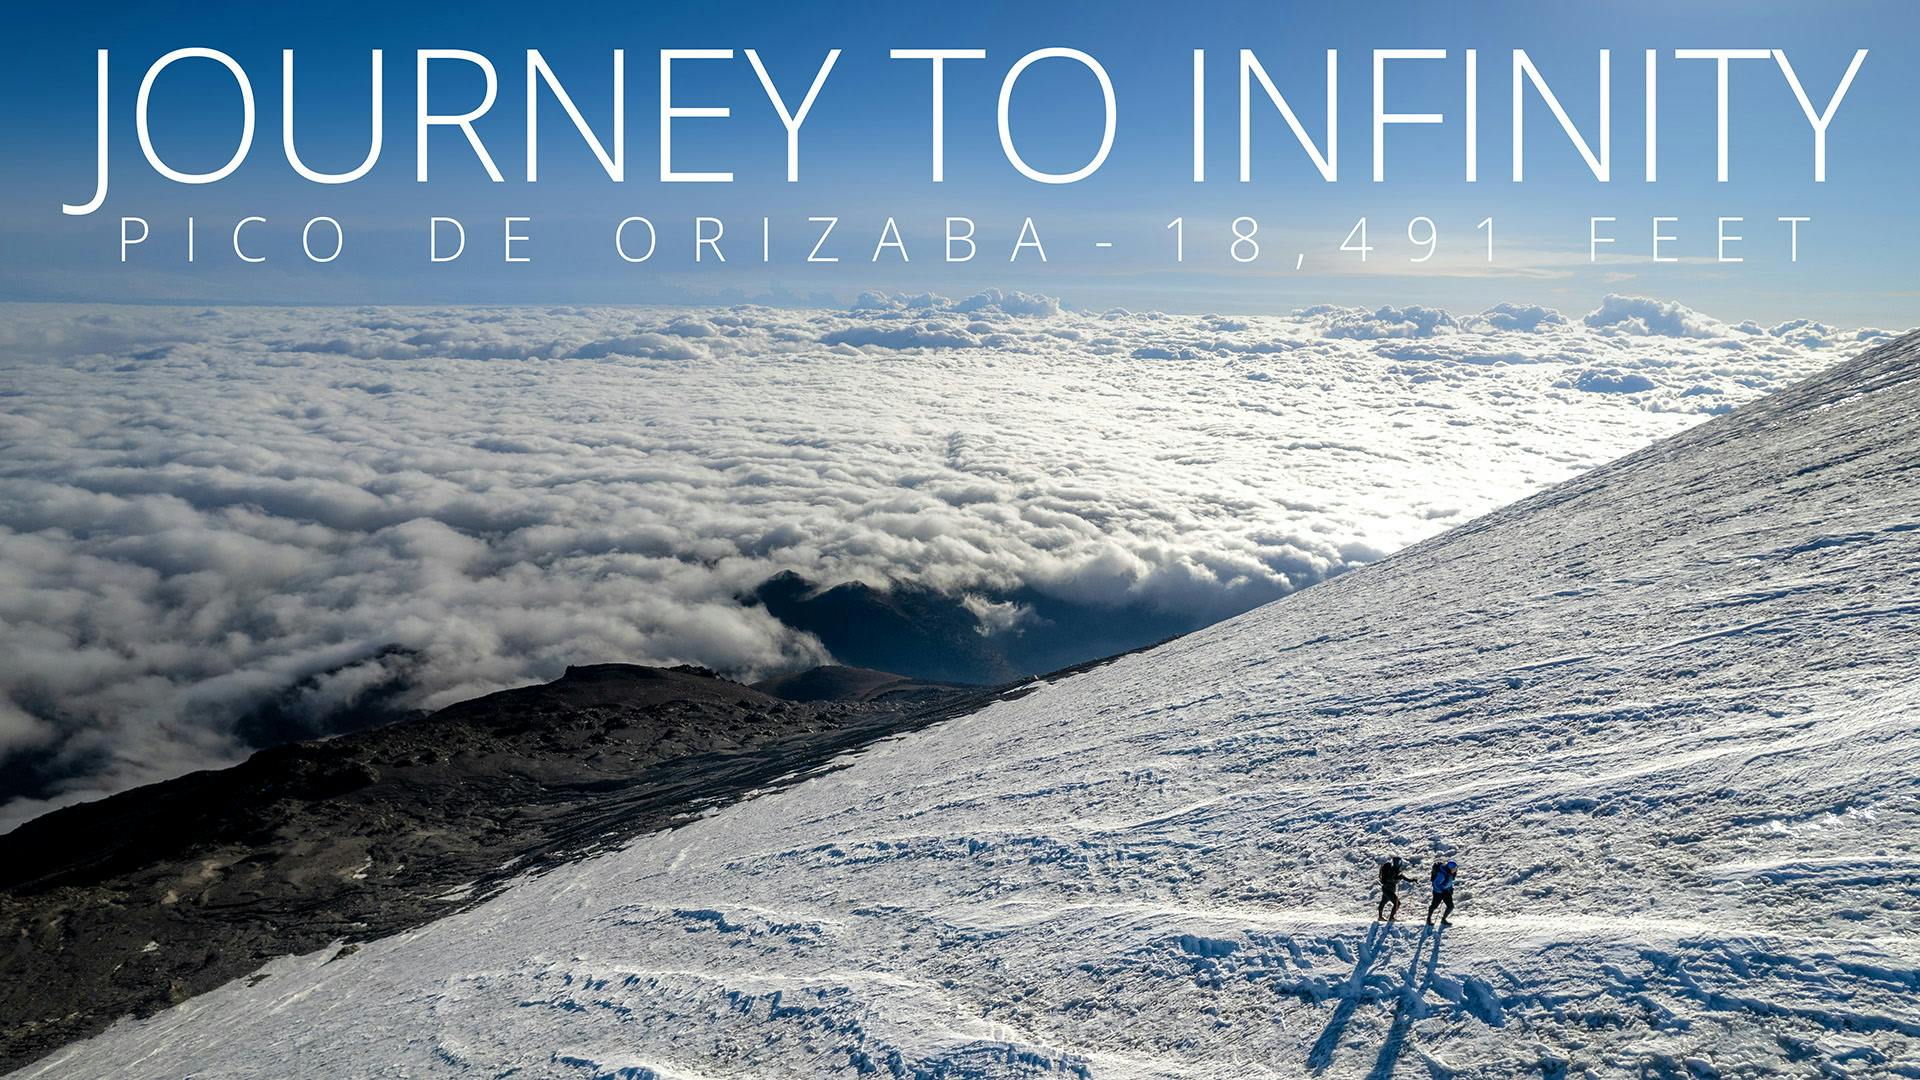 Journey to Infinity: Pico de Orizaba